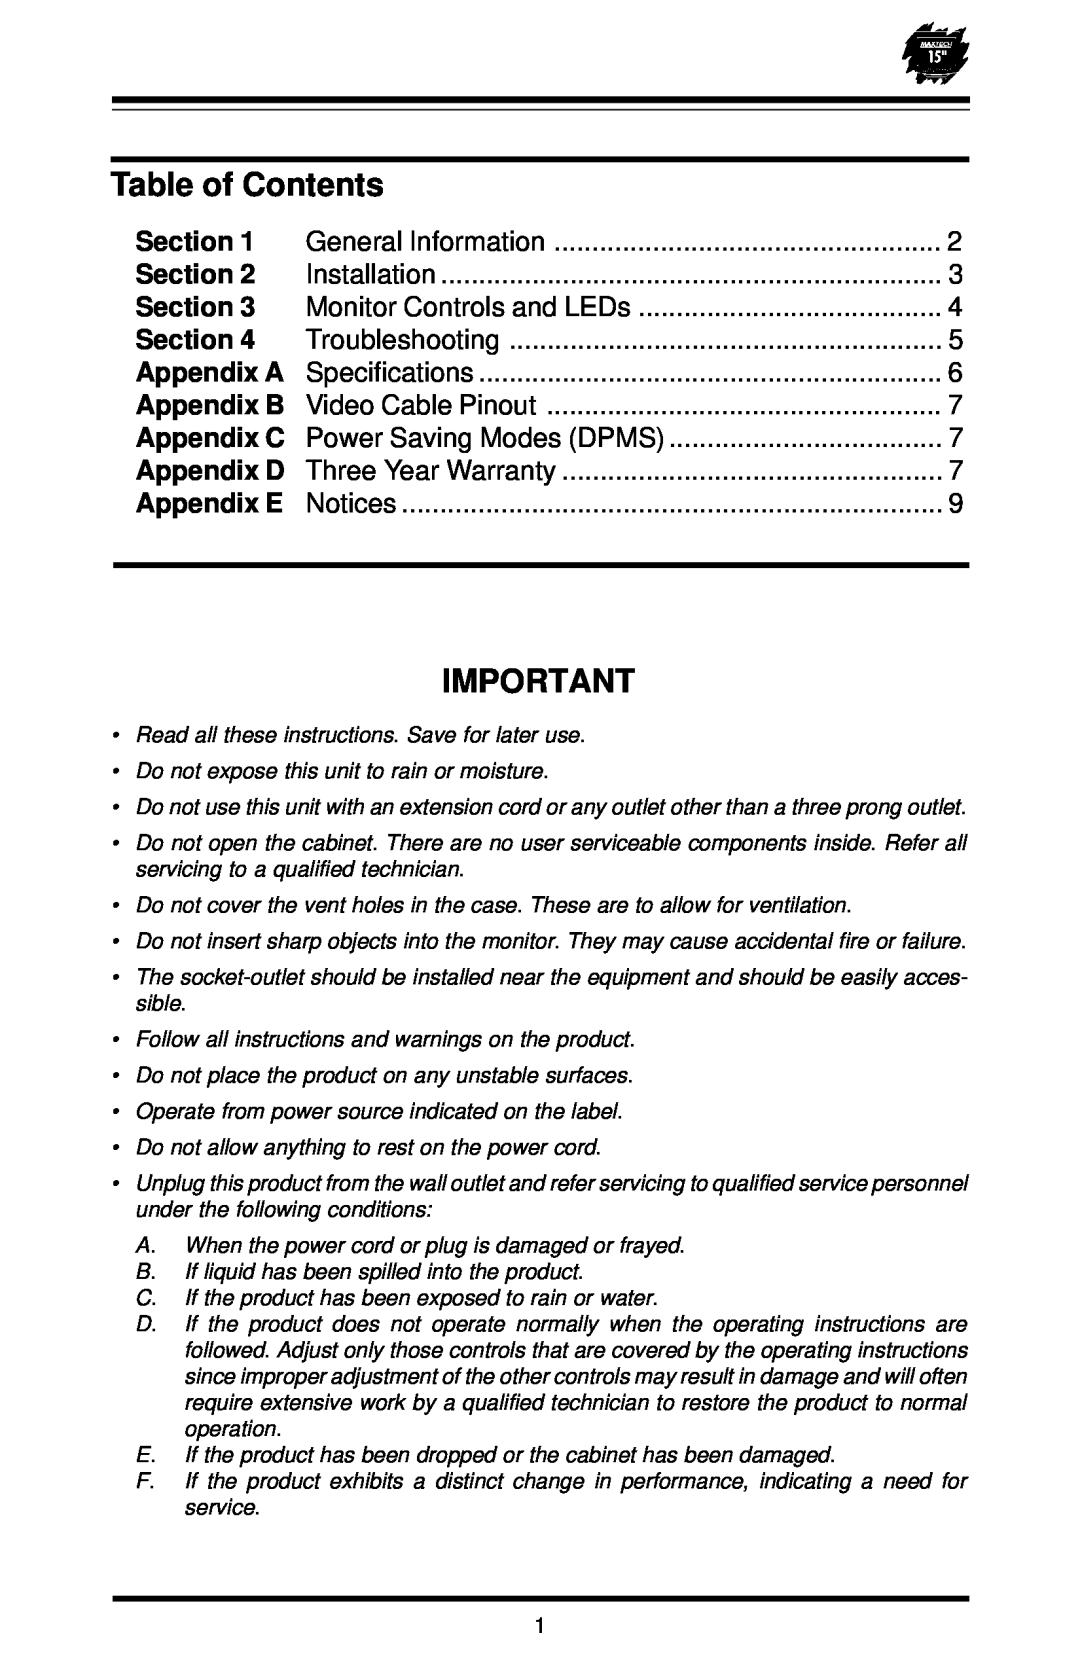 MaxTech XT-5871 user manual Table of Contents, Section, Appendix A, Appendix D, Appendix E 